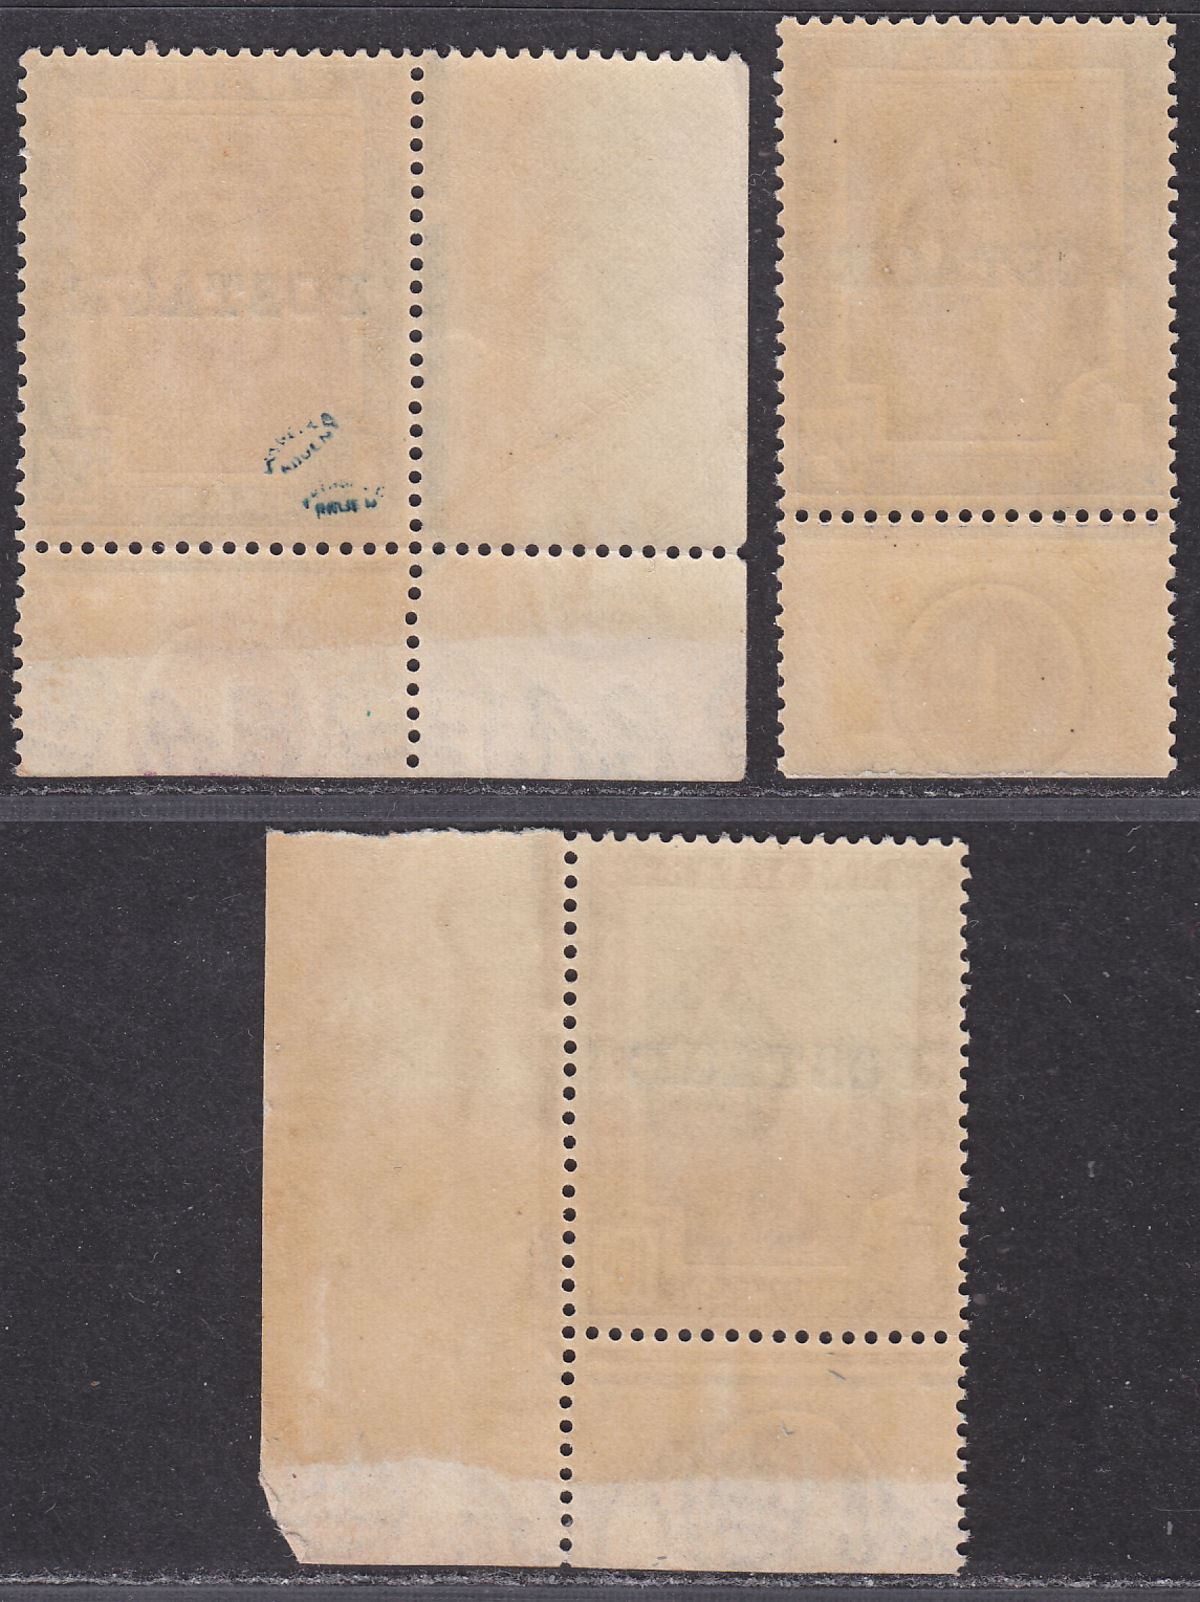 Malta 1926 KGV Figure Postage Overprint Plate 1 2sh, 2sh6d, 10sh Mint cat £80